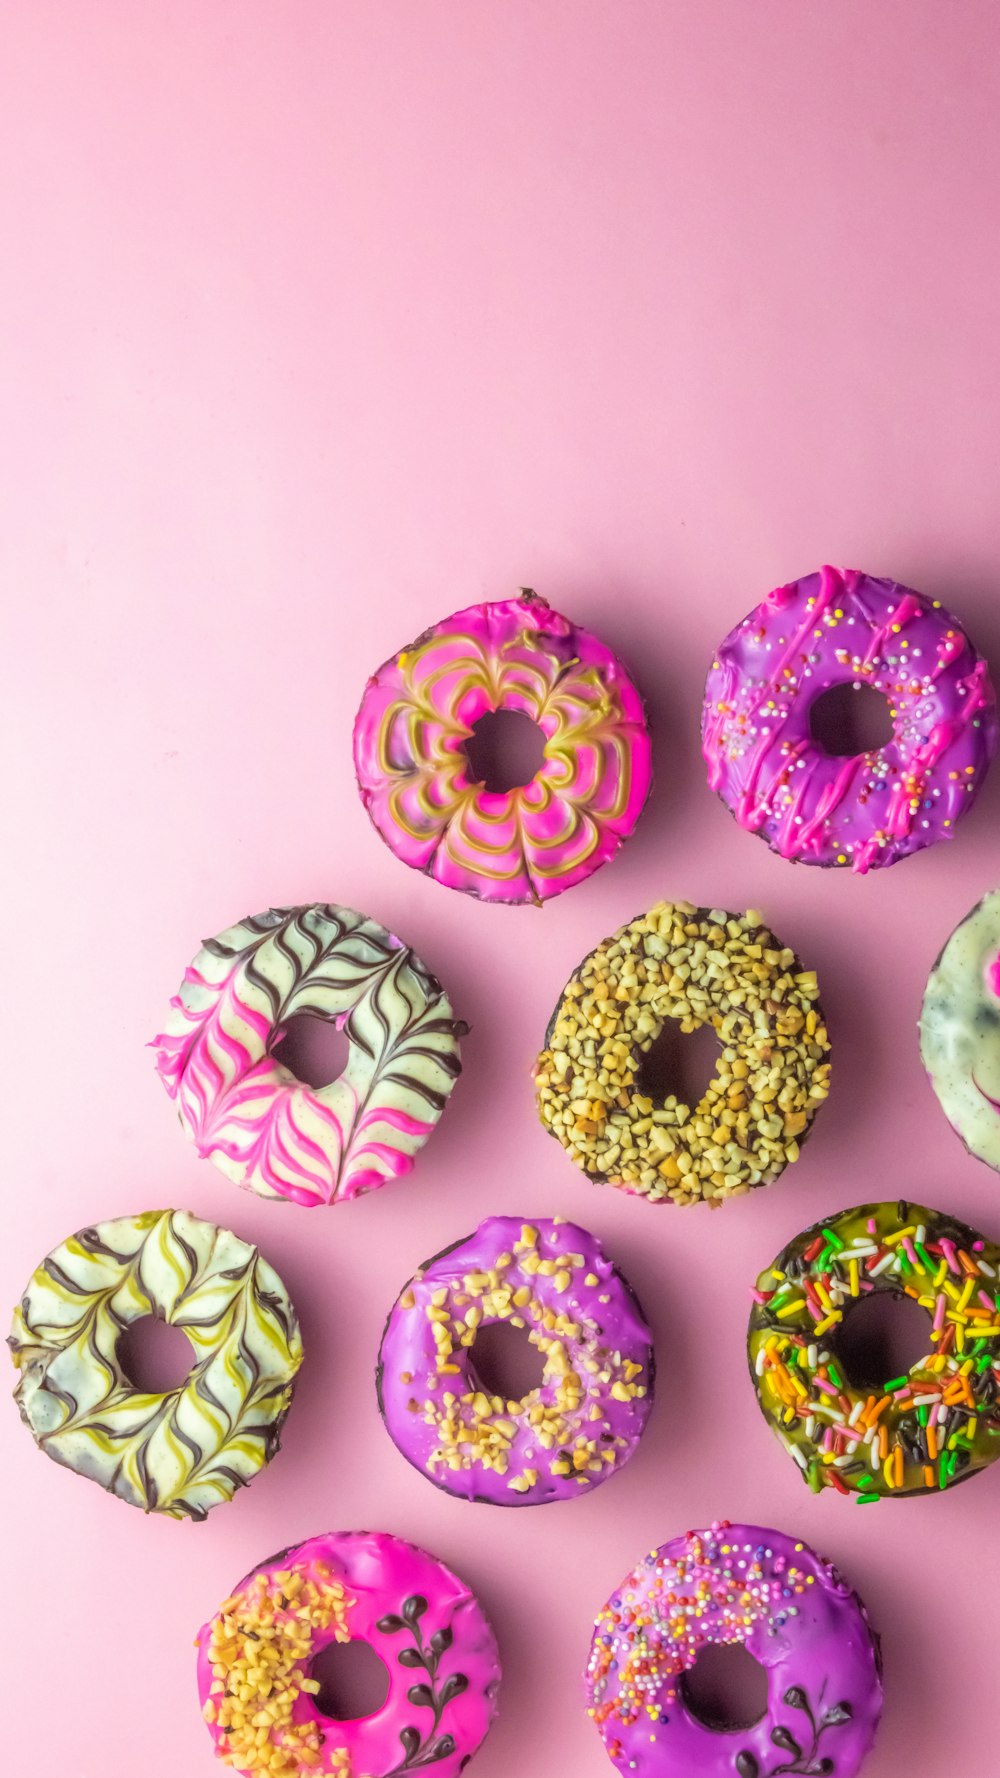 500+ Donut Pictures | Download Free Images on Unsplash